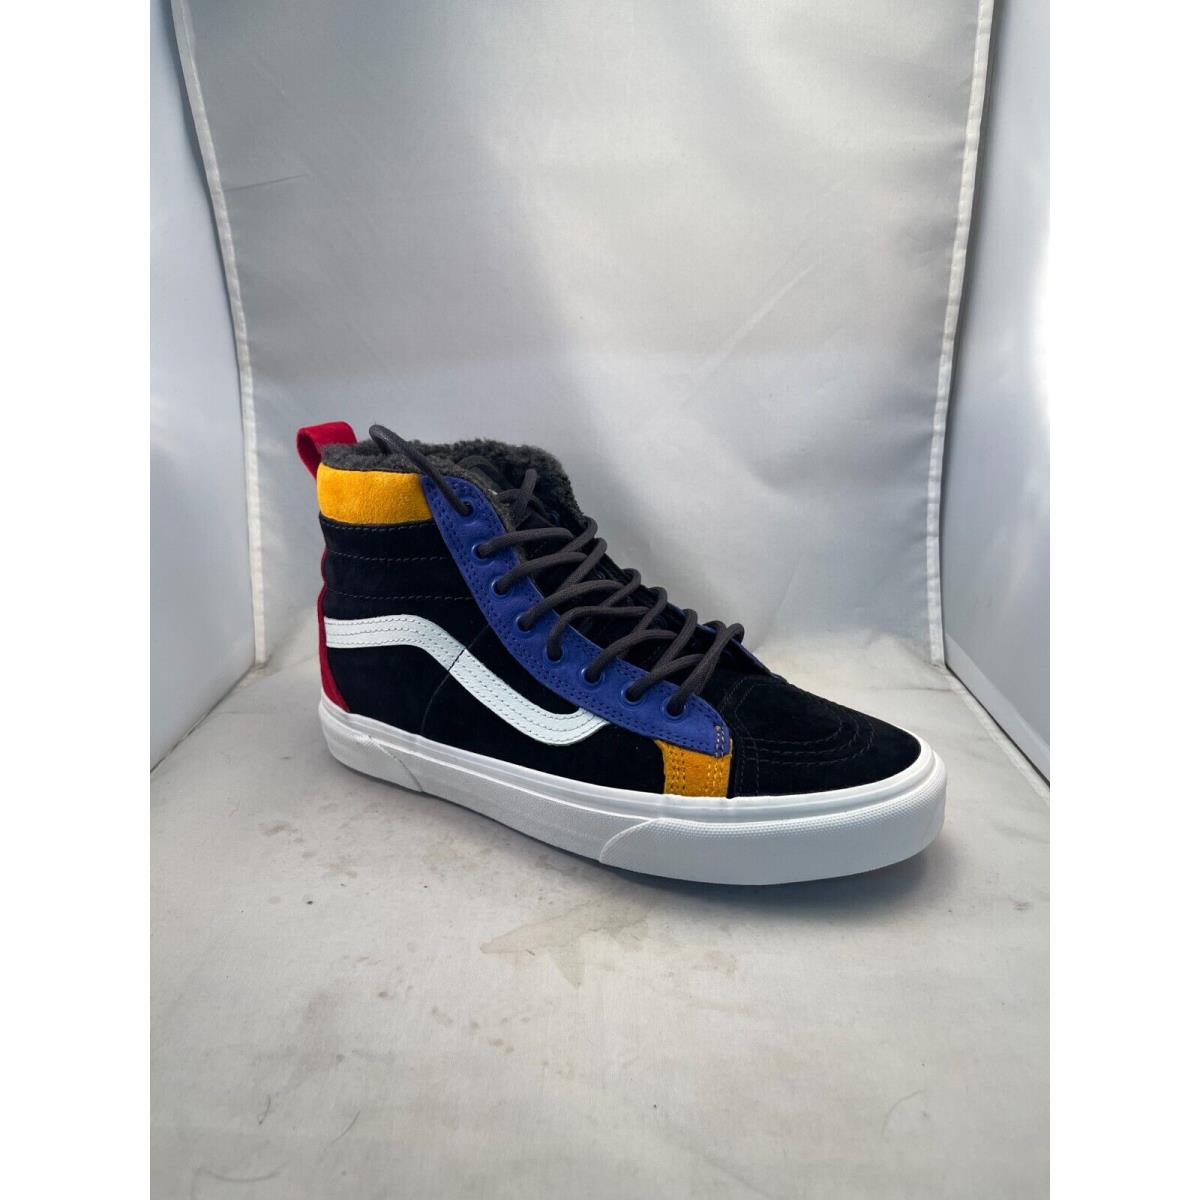 Vans SK8-Hi Skateboarding or Casual Shoes Sneakers Bsfw Men Size 7.5